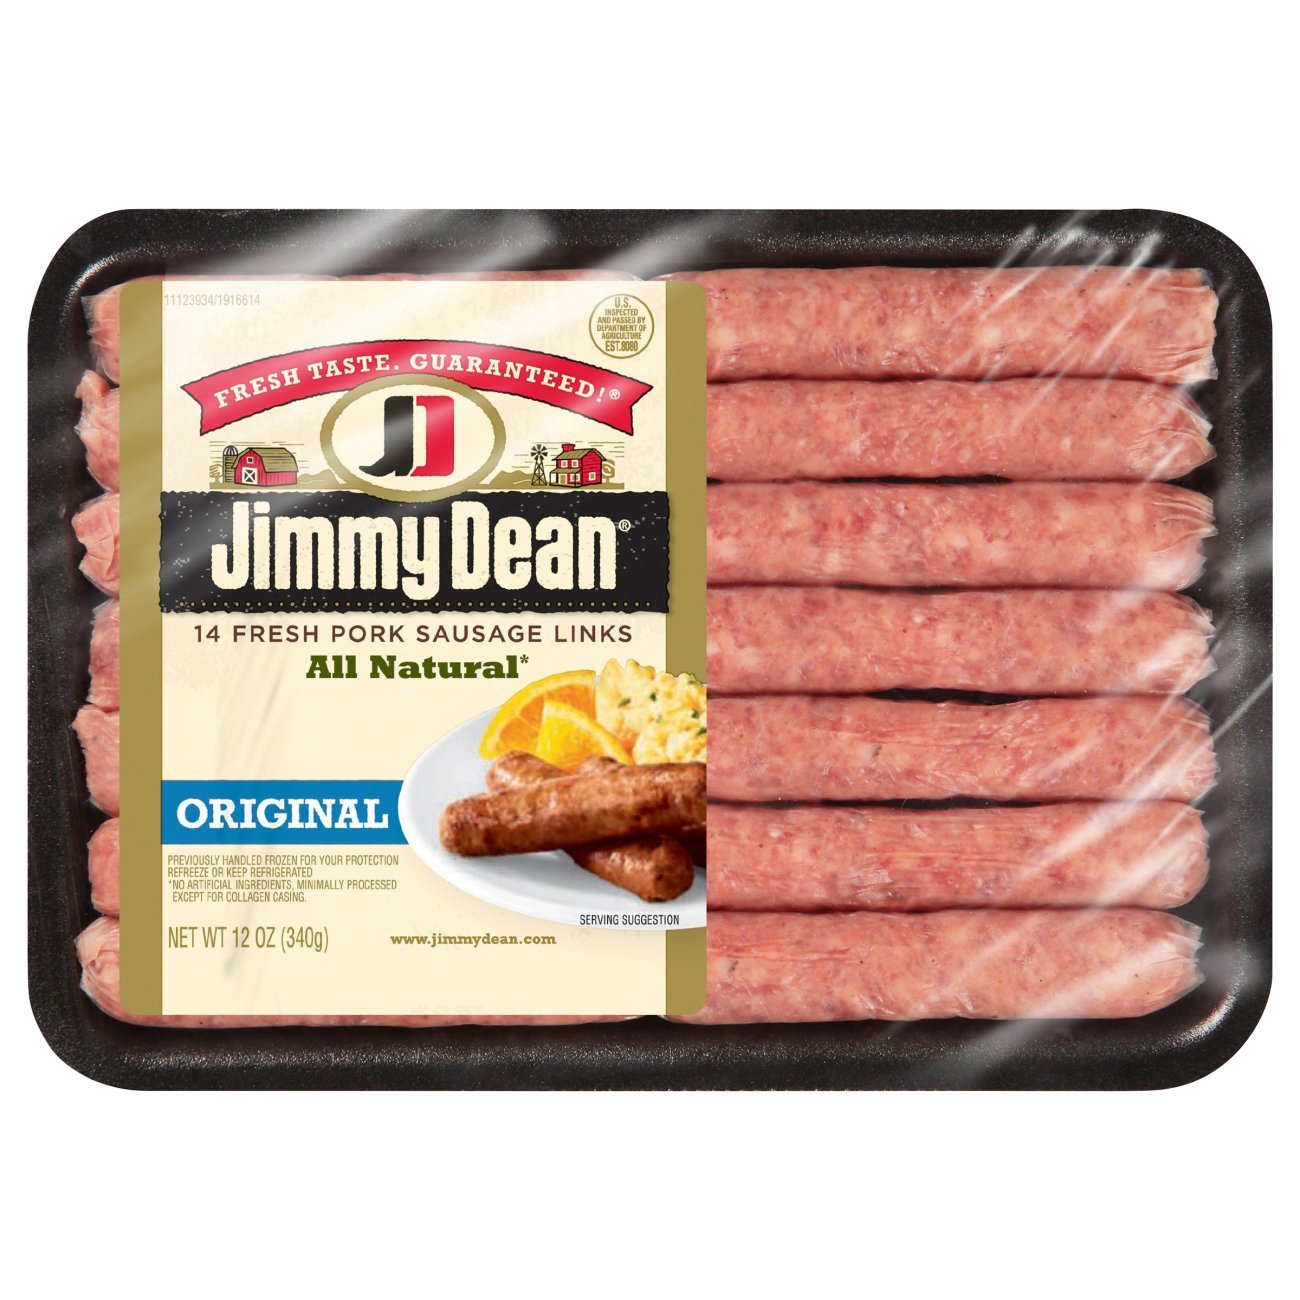 Jimmy Dean Premium All Natural Original Pork Sausage Links ...